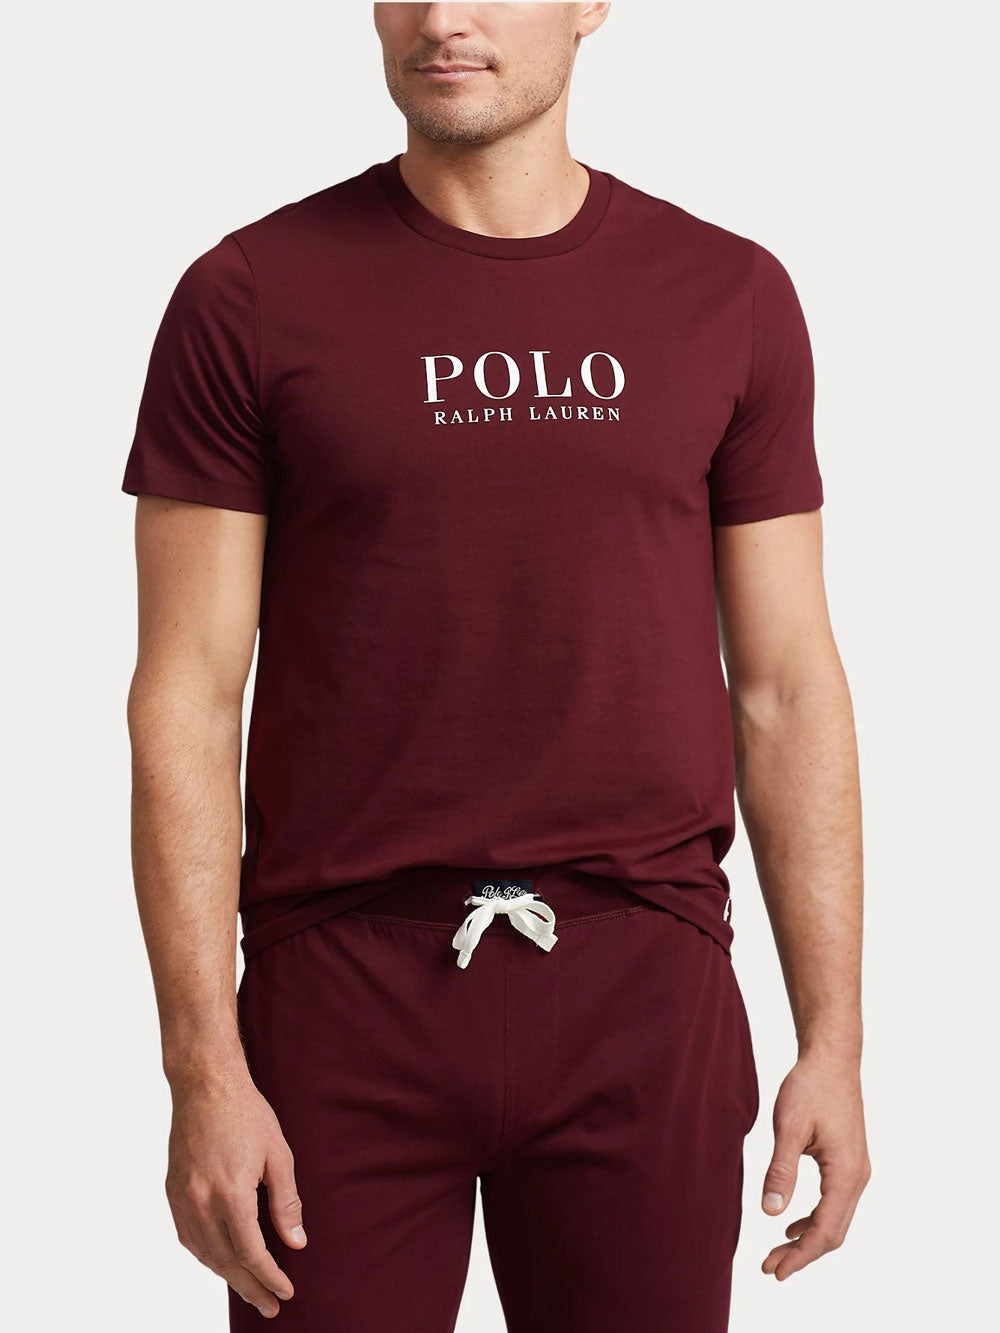 POLO RALPH LAUREN T-shirt Uomo - Rosso